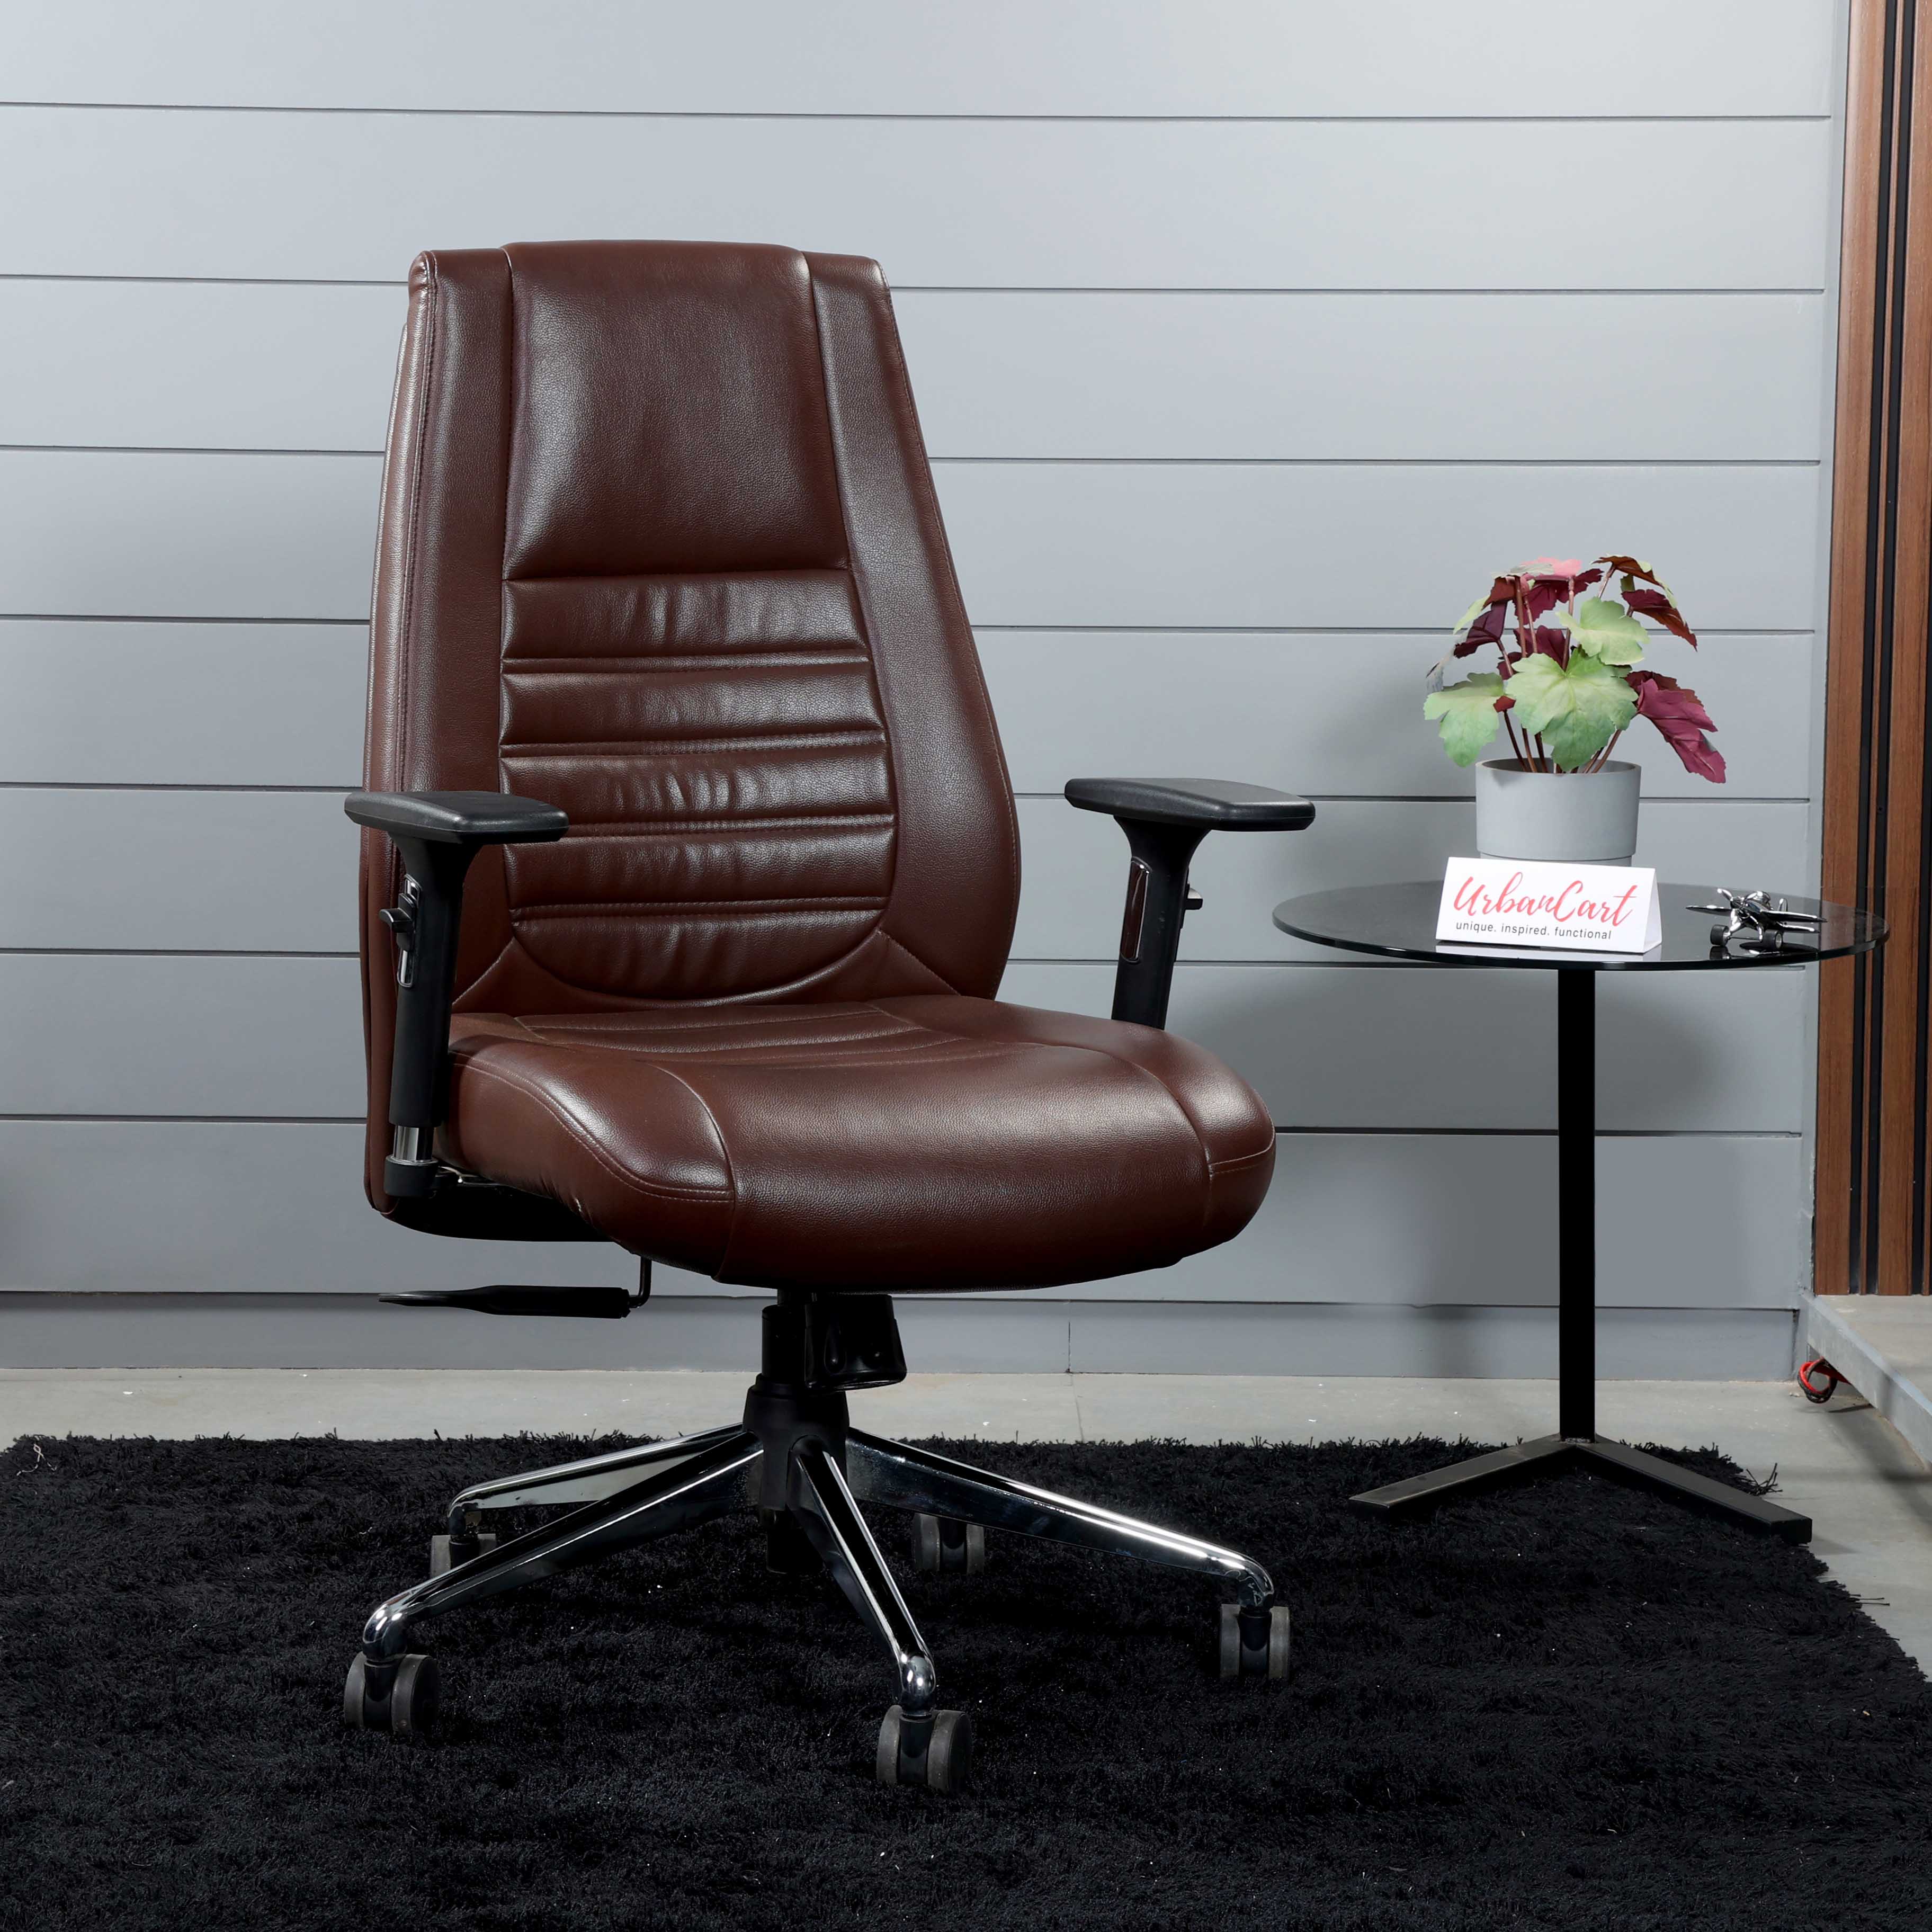 Thomas Chrome Base Upholstered Medium Back Executive Chair - Brown Chair urbancart